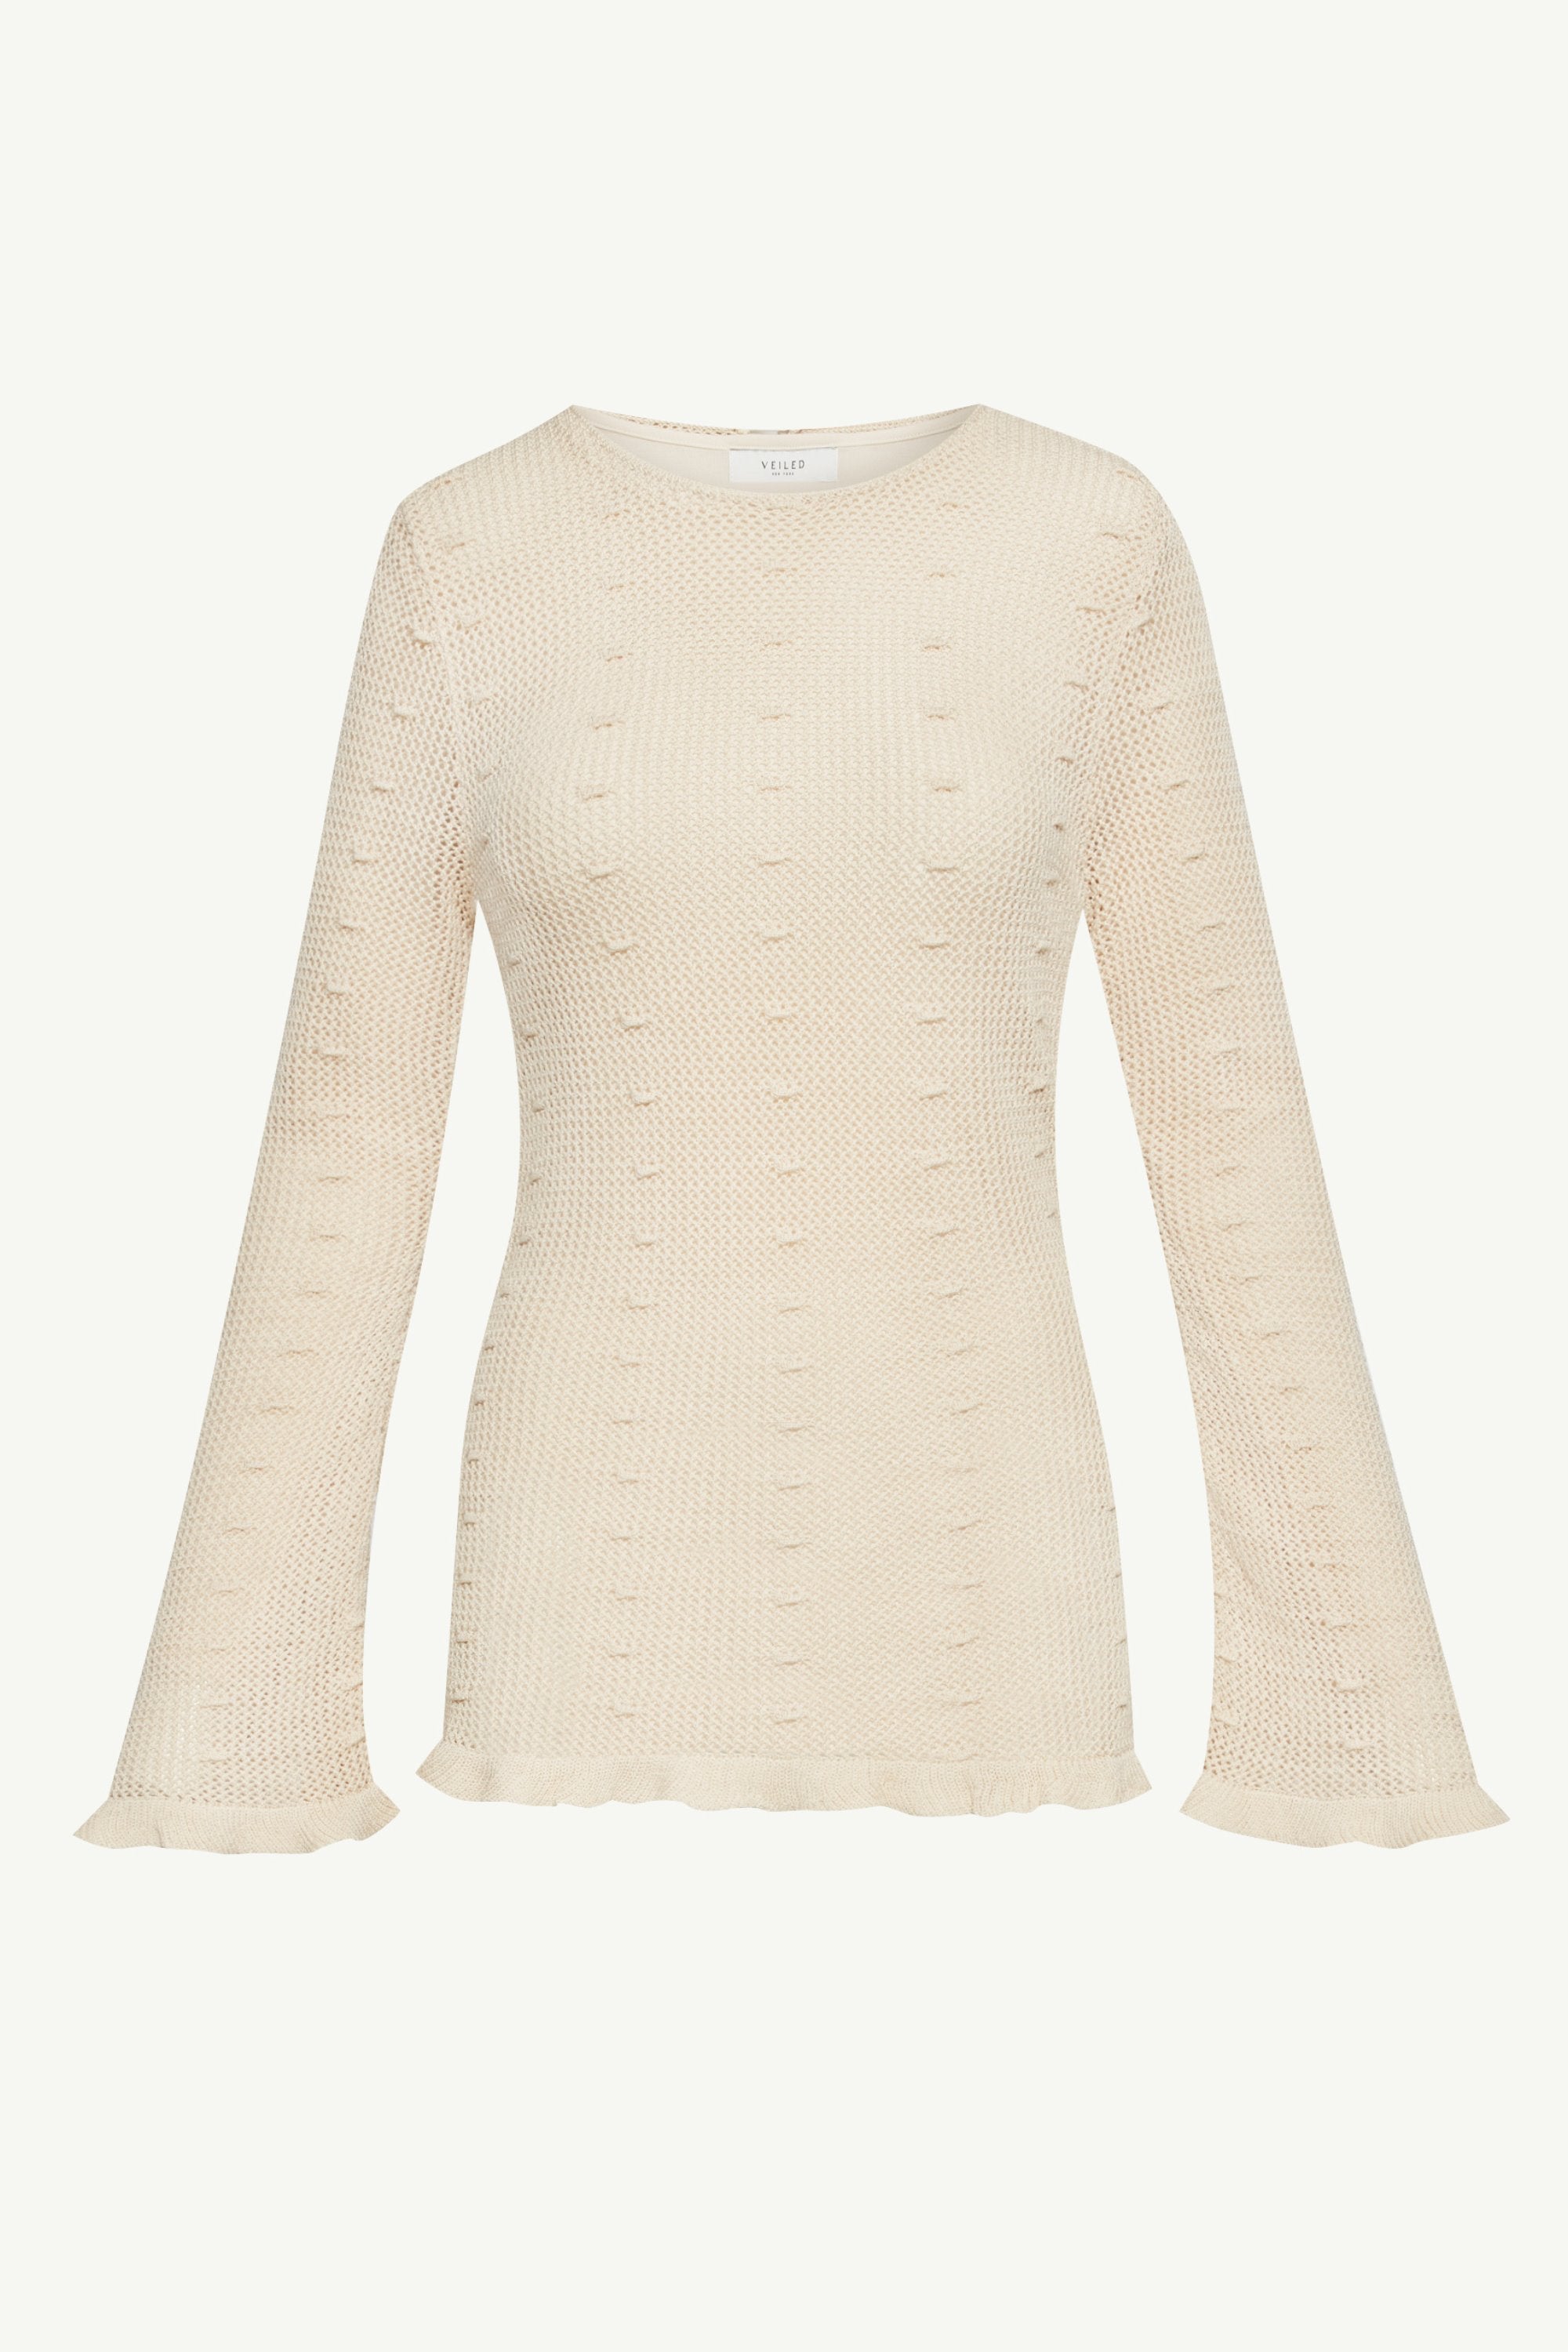 Yara Crochet Top - Off White Clothing epschoolboard 